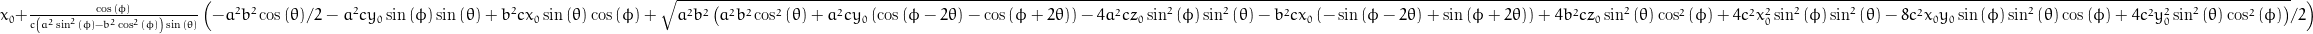 x_{0} + \frac{\cos{\left (\phi \right )}}{c \left(a^{2} \sin^{2}{\left (\phi \right )} - b^{2} \cos^{2}{\left (\phi \right )}\right) \sin{\left (\theta \right )}} \left(- \frac{a^{2} b^{2}}{2} \cos{\left (\theta \right )} - a^{2} c y_{0} \sin{\left (\phi \right )} \sin{\left (\theta \right )} + b^{2} c x_{0} \sin{\left (\theta \right )} \cos{\left (\phi \right )} + \frac{1}{2} \sqrt{a^{2} b^{2} \left(a^{2} b^{2} \cos^{2}{\left (\theta \right )} + a^{2} c y_{0} \left(\cos{\left (\phi - 2 \theta \right )} - \cos{\left (\phi + 2 \theta \right )}\right) - 4 a^{2} c z_{0} \sin^{2}{\left (\phi \right )} \sin^{2}{\left (\theta \right )} - b^{2} c x_{0} \left(- \sin{\left (\phi - 2 \theta \right )} + \sin{\left (\phi + 2 \theta \right )}\right) + 4 b^{2} c z_{0} \sin^{2}{\left (\theta \right )} \cos^{2}{\left (\phi \right )} + 4 c^{2} x_{0}^{2} \sin^{2}{\left (\phi \right )} \sin^{2}{\left (\theta \right )} - 8 c^{2} x_{0} y_{0} \sin{\left (\phi \right )} \sin^{2}{\left (\theta \right )} \cos{\left (\phi \right )} + 4 c^{2} y_{0}^{2} \sin^{2}{\left (\theta \right )} \cos^{2}{\left (\phi \right )}\right)}\right)